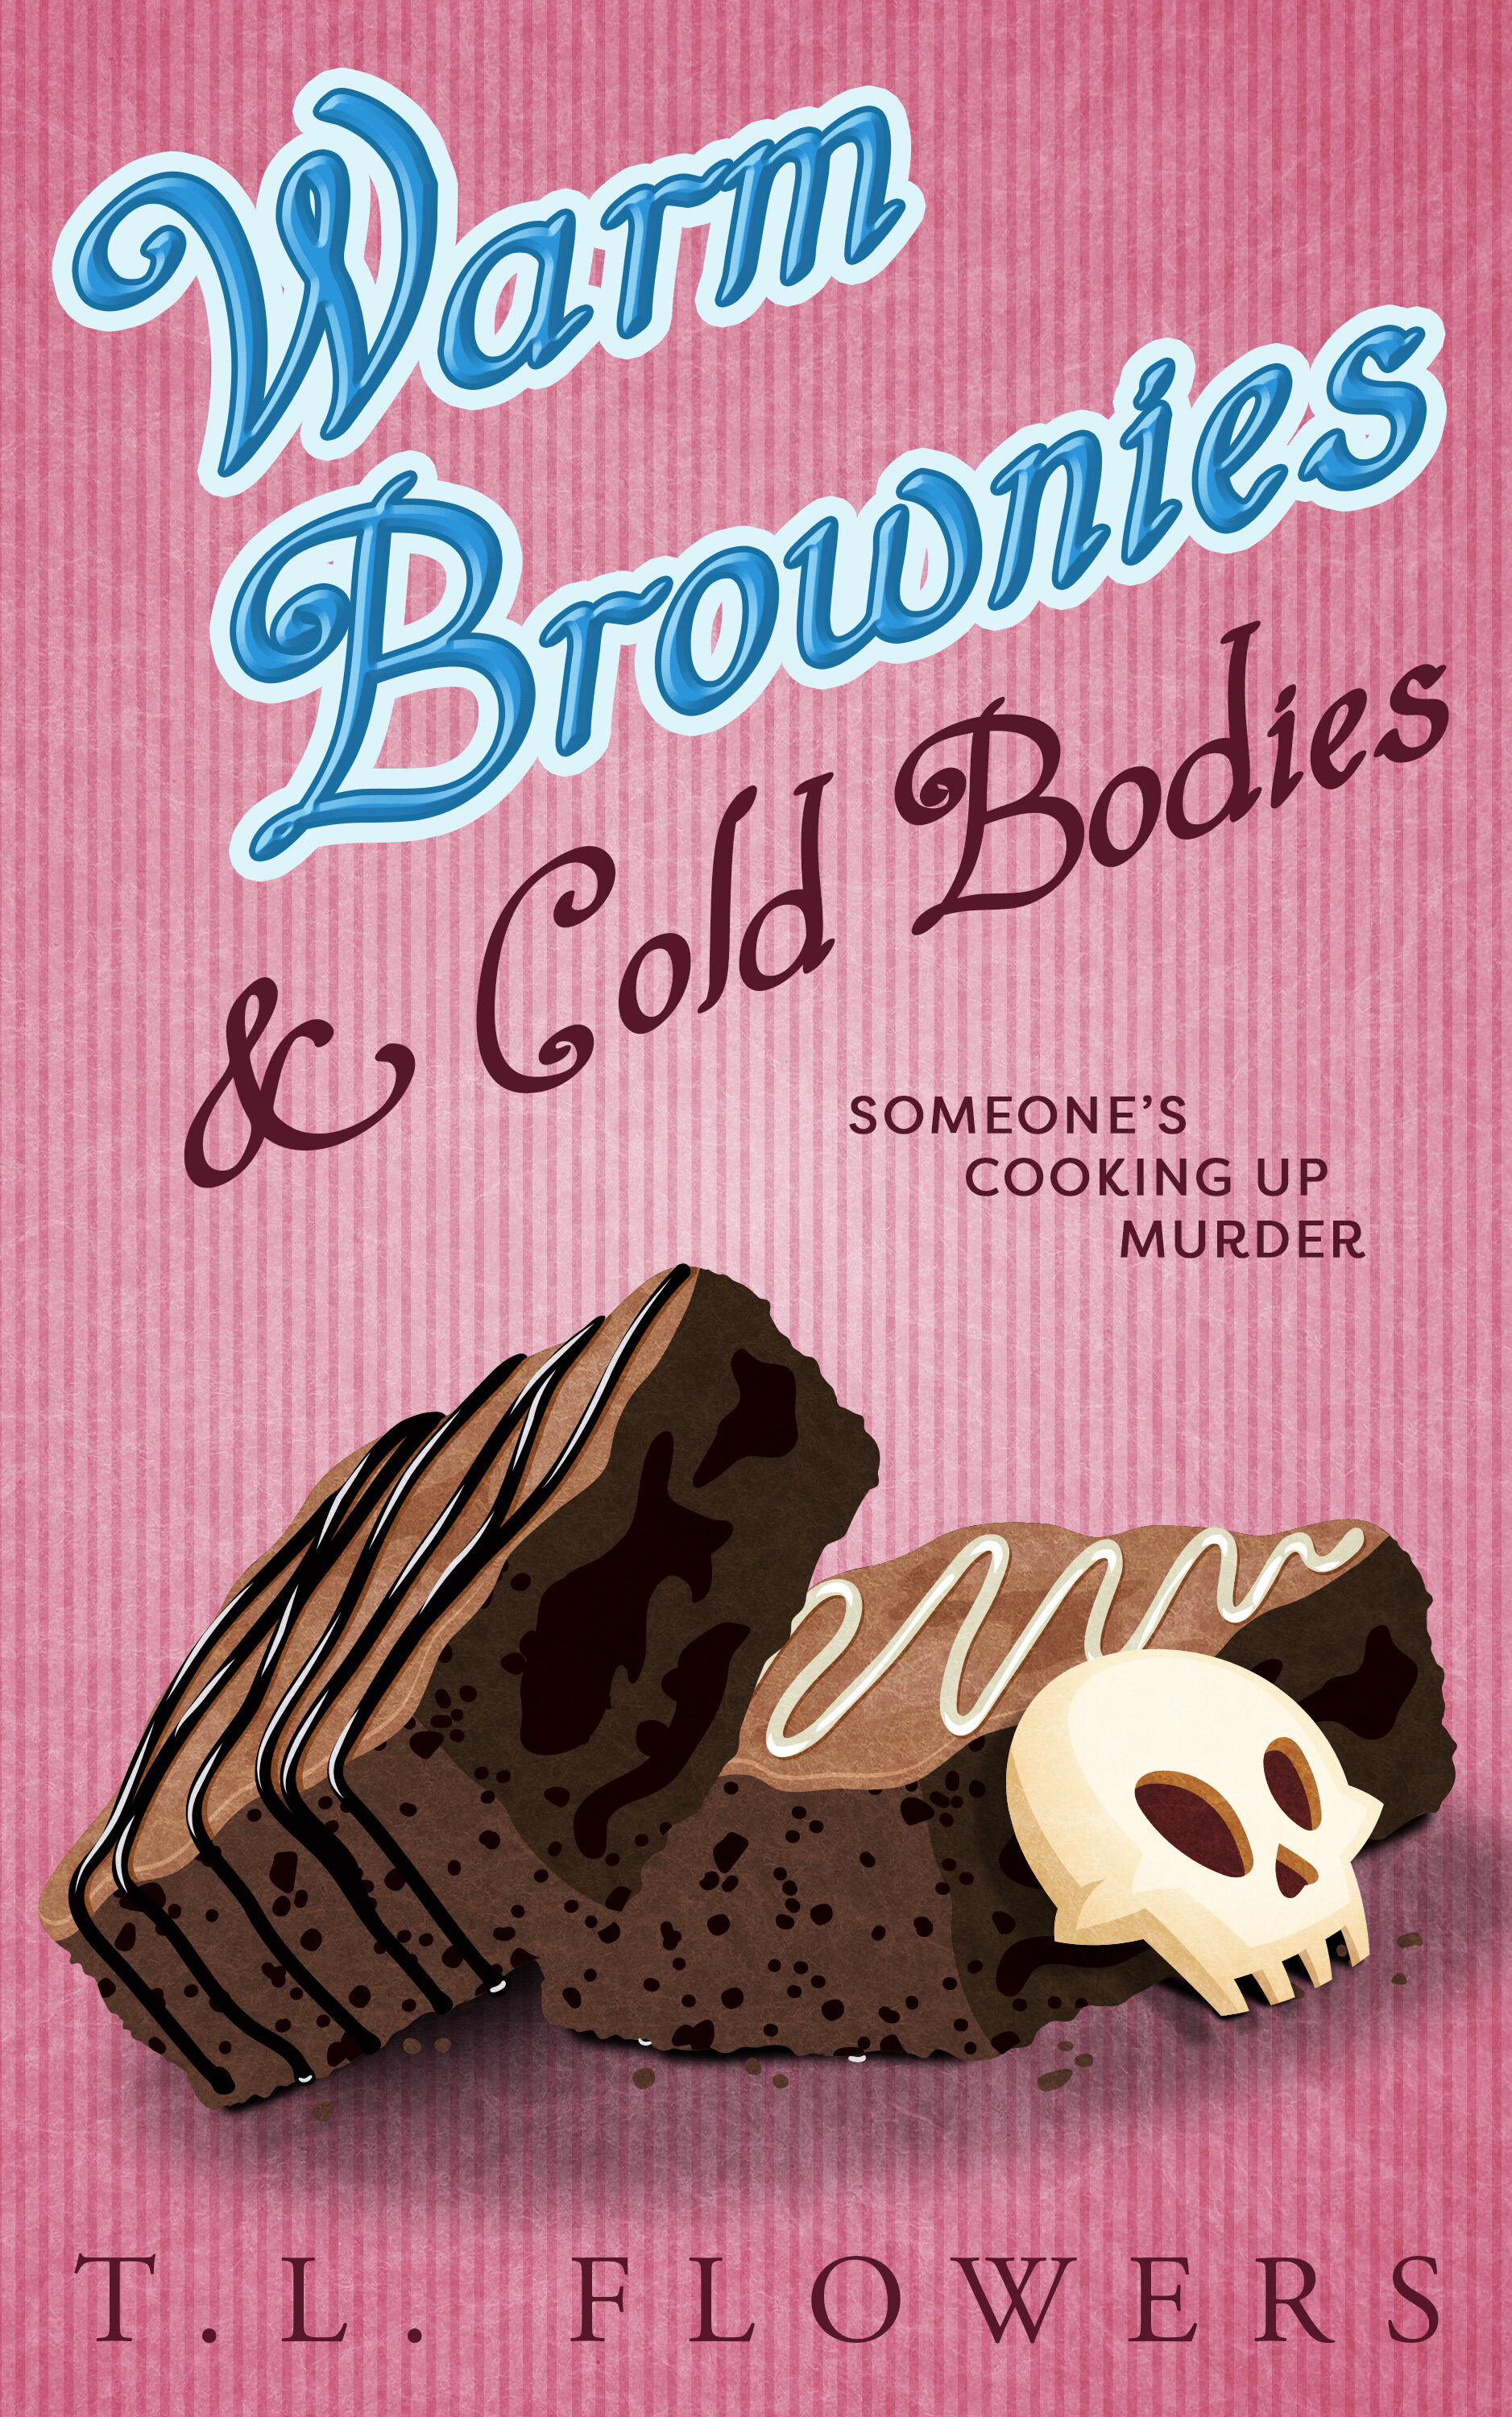 Warm-Brownies-and-Cold-Bodies-1877x3000-Amazon-300dpi.jpg